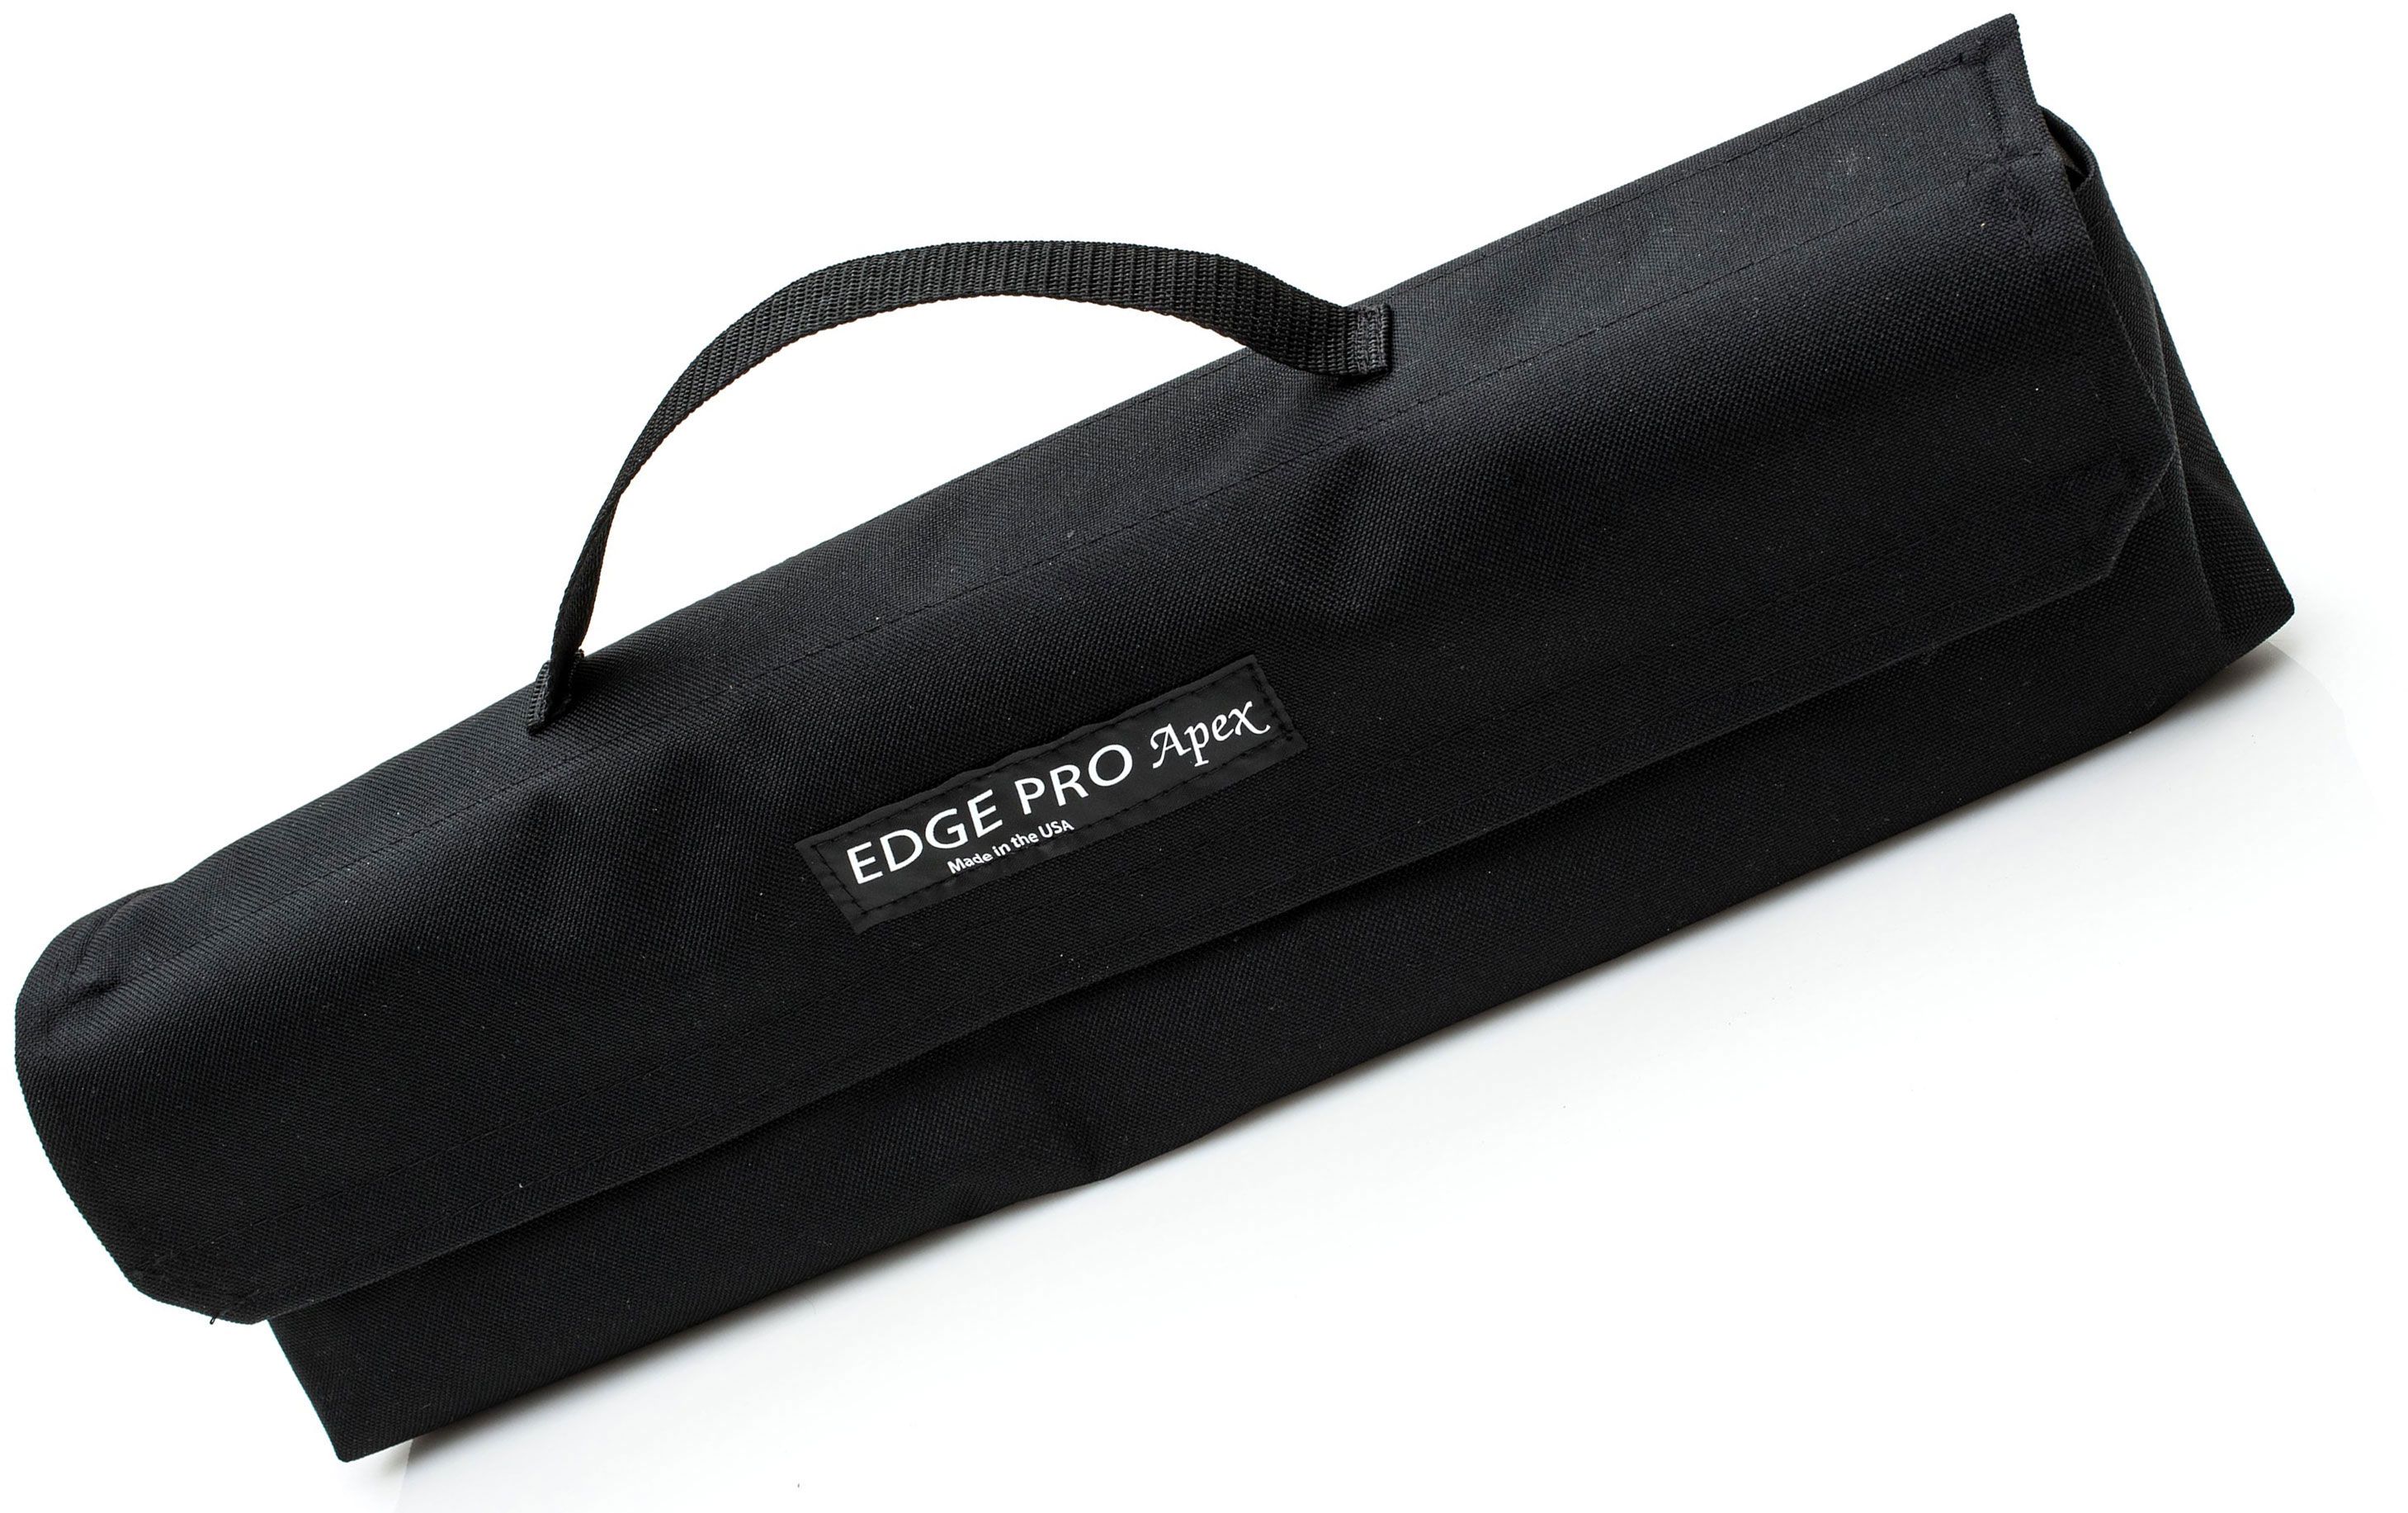 Edge Pro Professional Kit 4, sharpening system  Advantageously shopping at